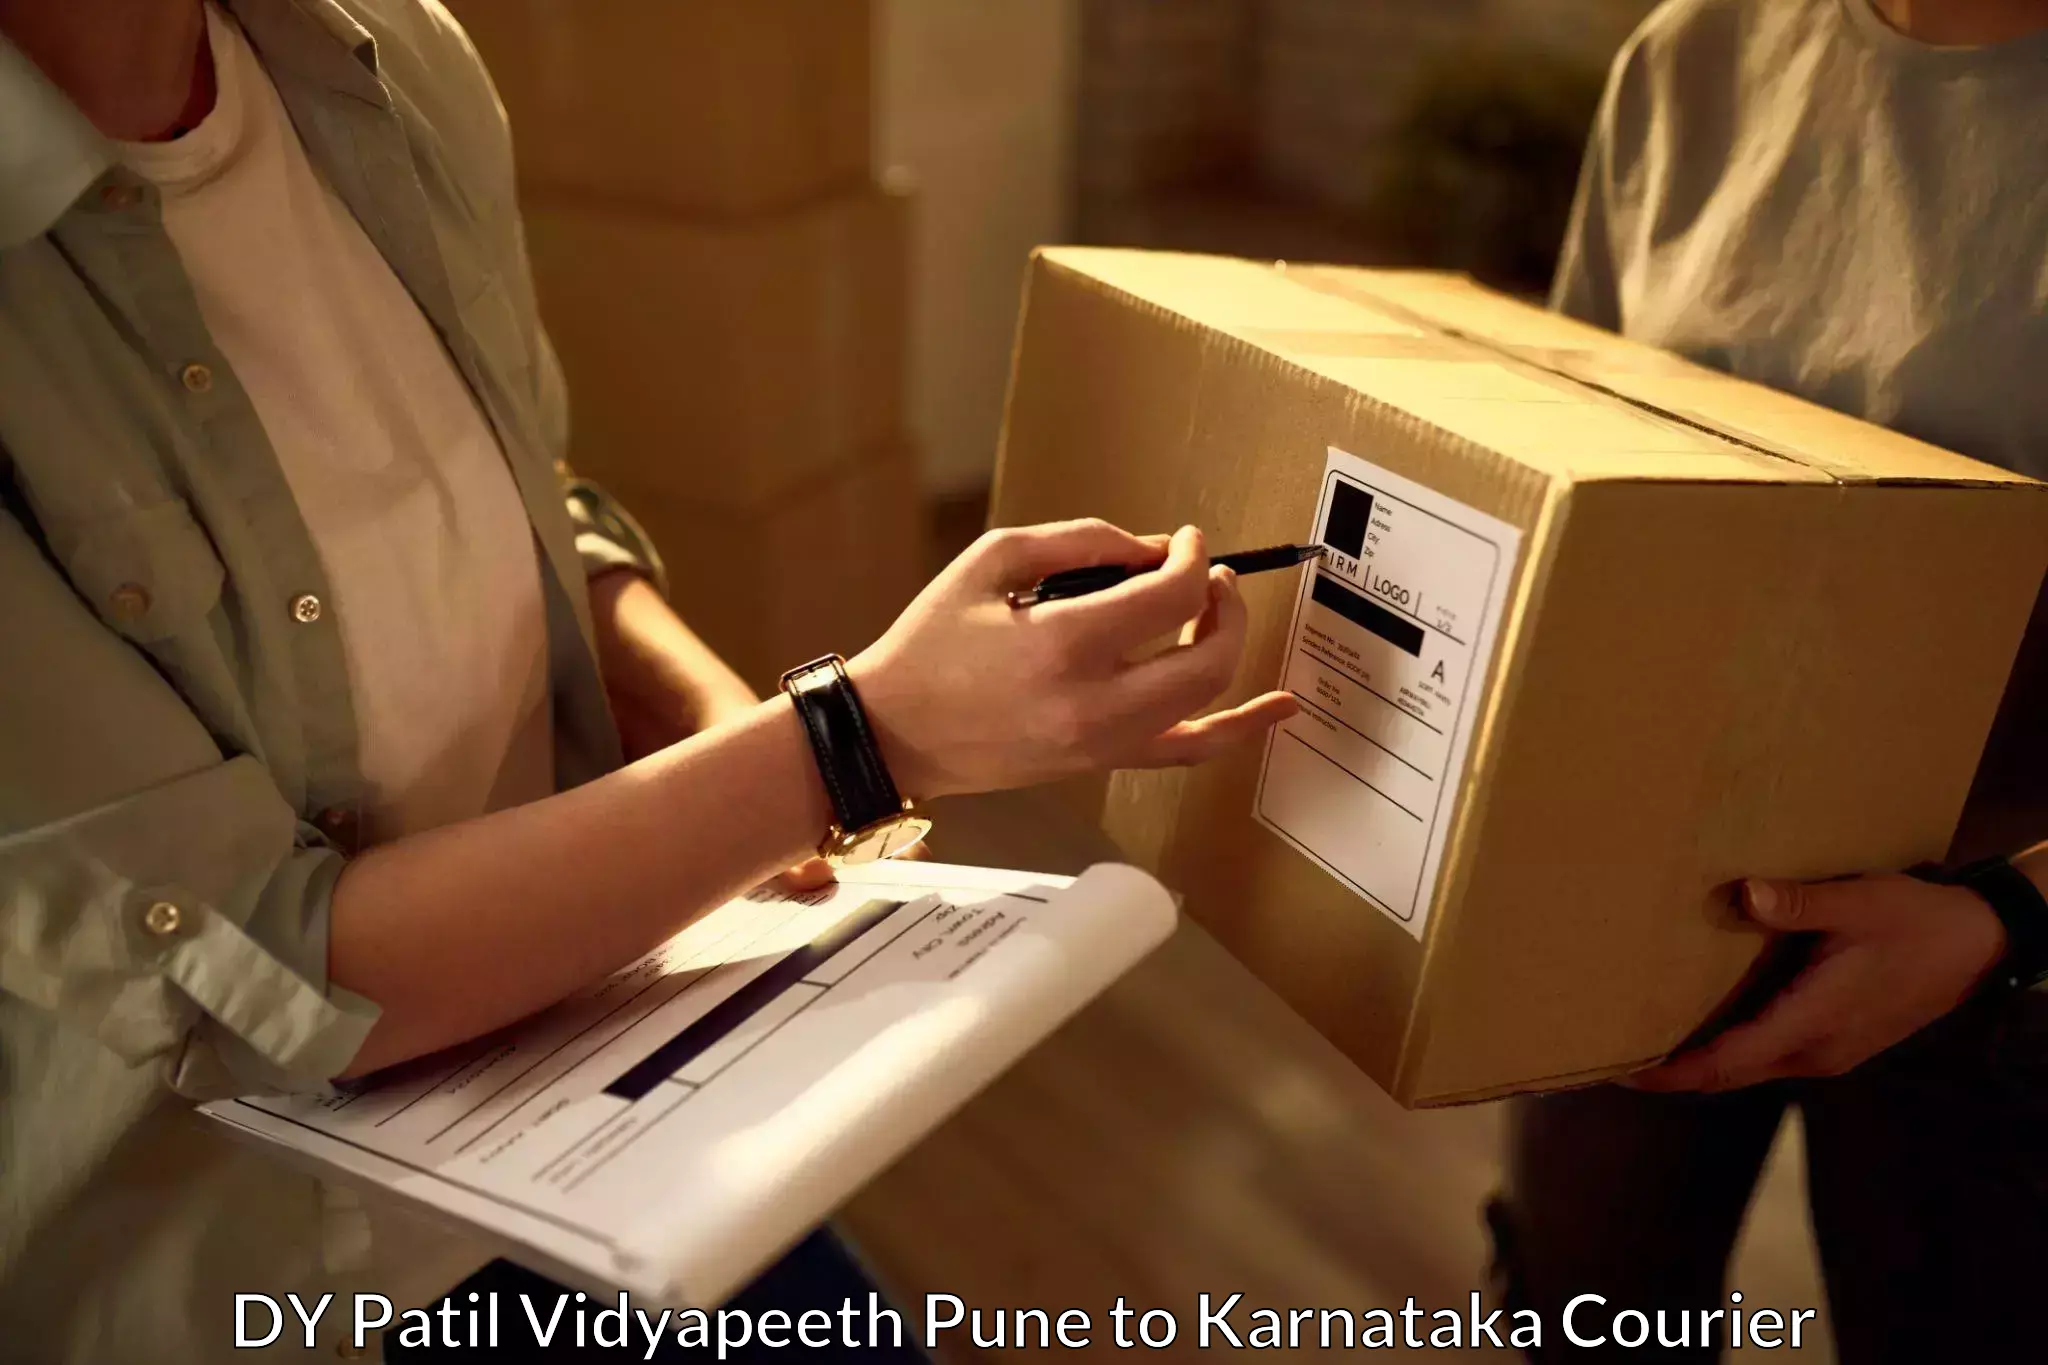 Business delivery service DY Patil Vidyapeeth Pune to Yenepoya Mangalore